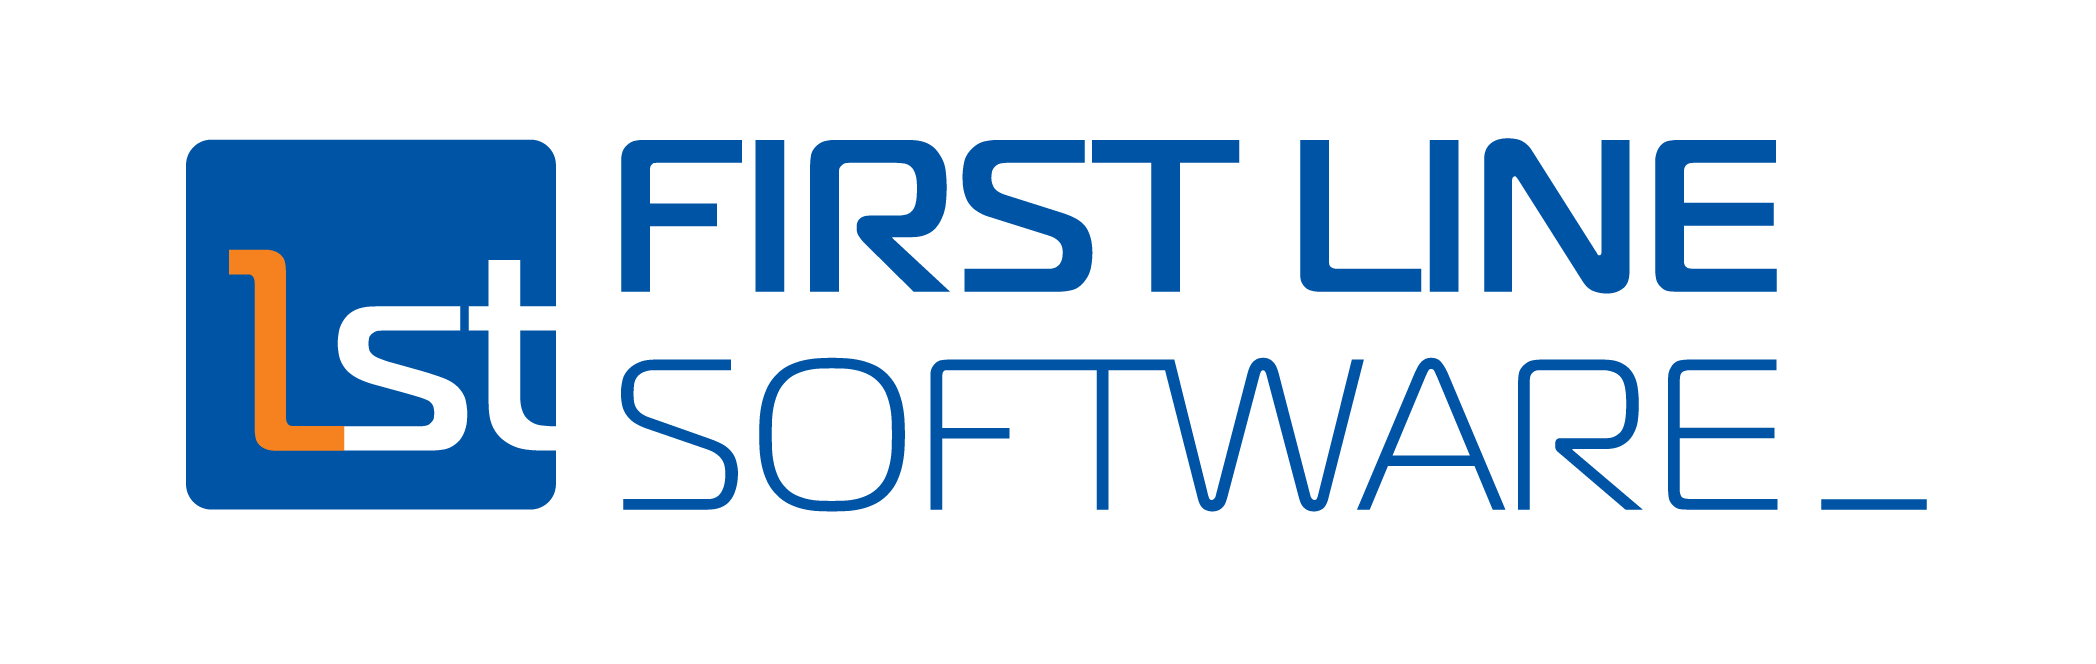 Line com ru. First line. Software компания. Line software. One line логотип компания.